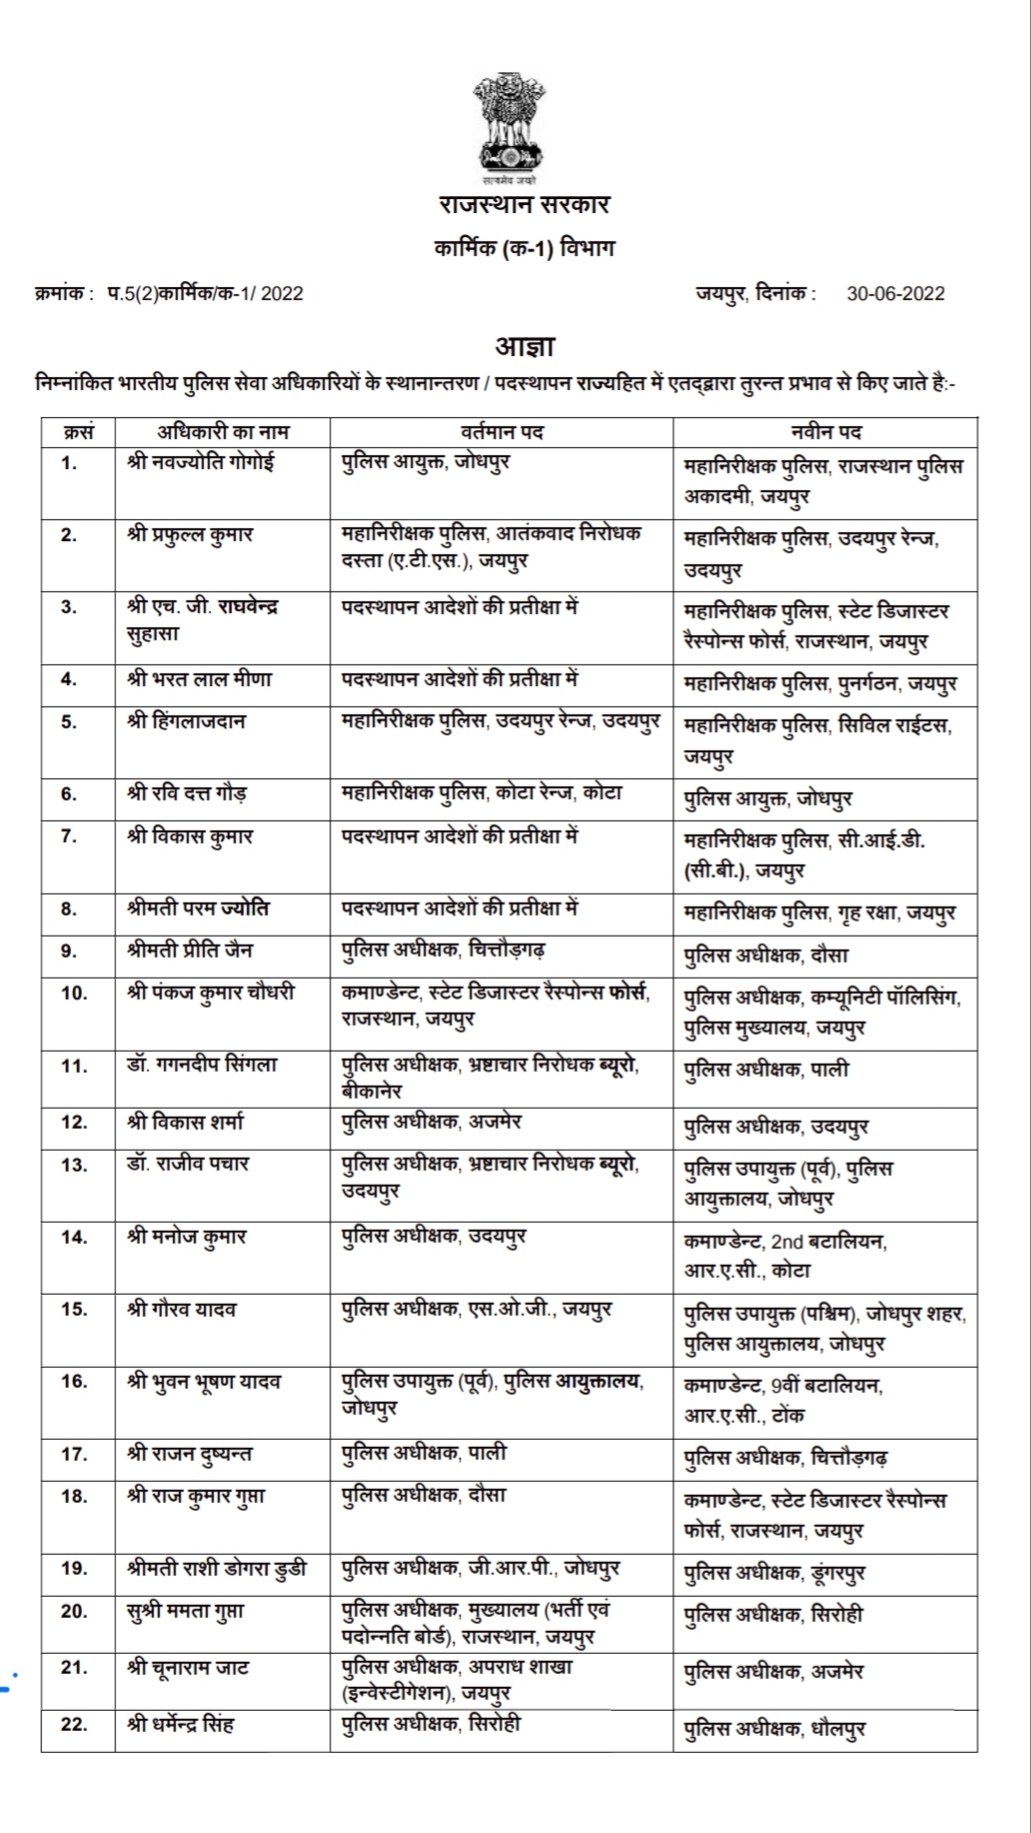 Rajasthan IPS transfer list